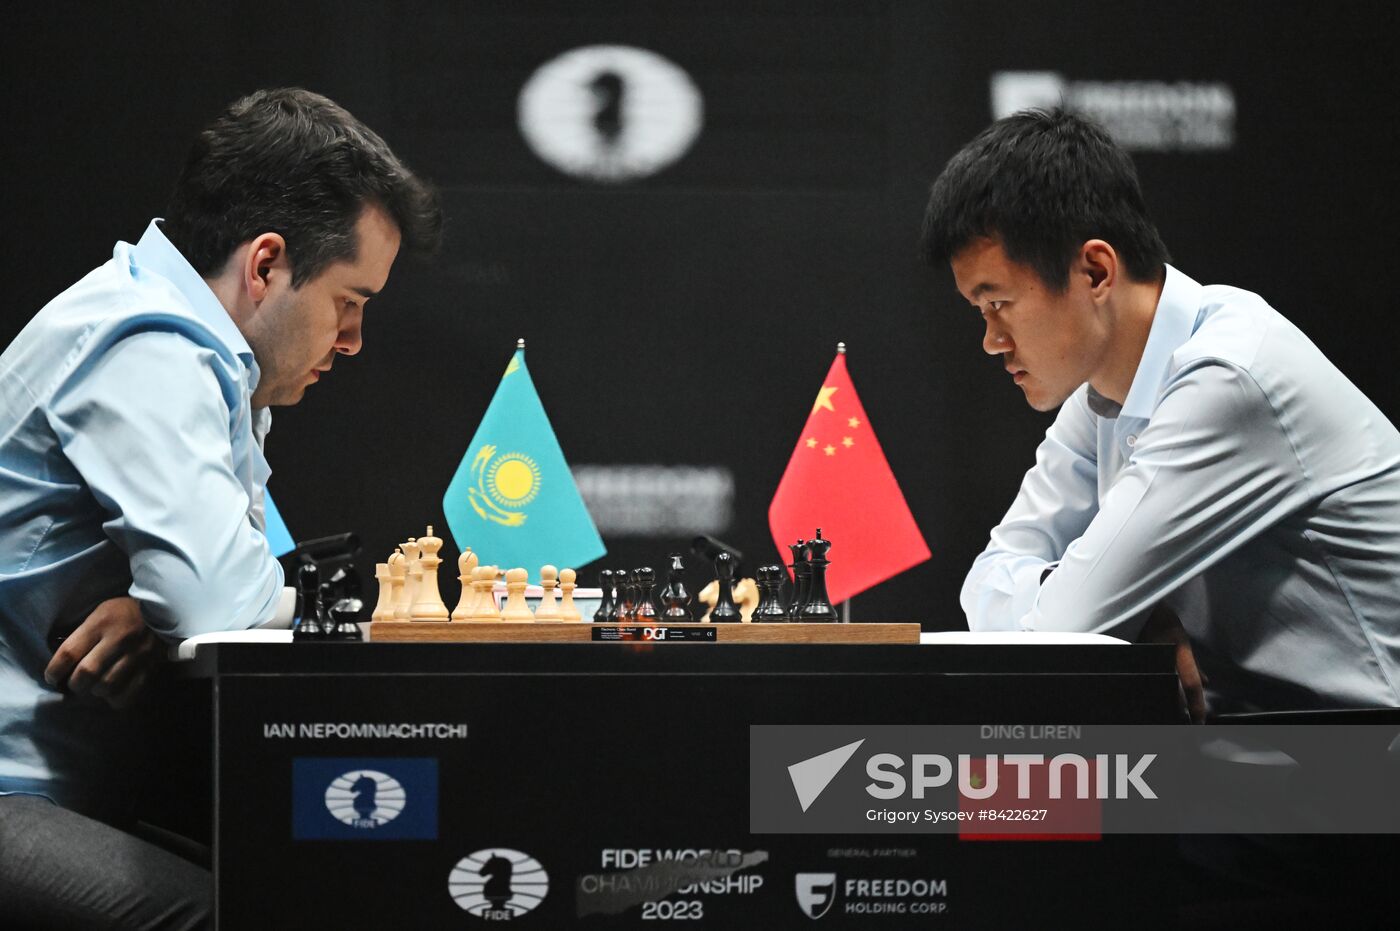 Ding Liren vs Nepomniachtchi, FIDE World Championship 2023